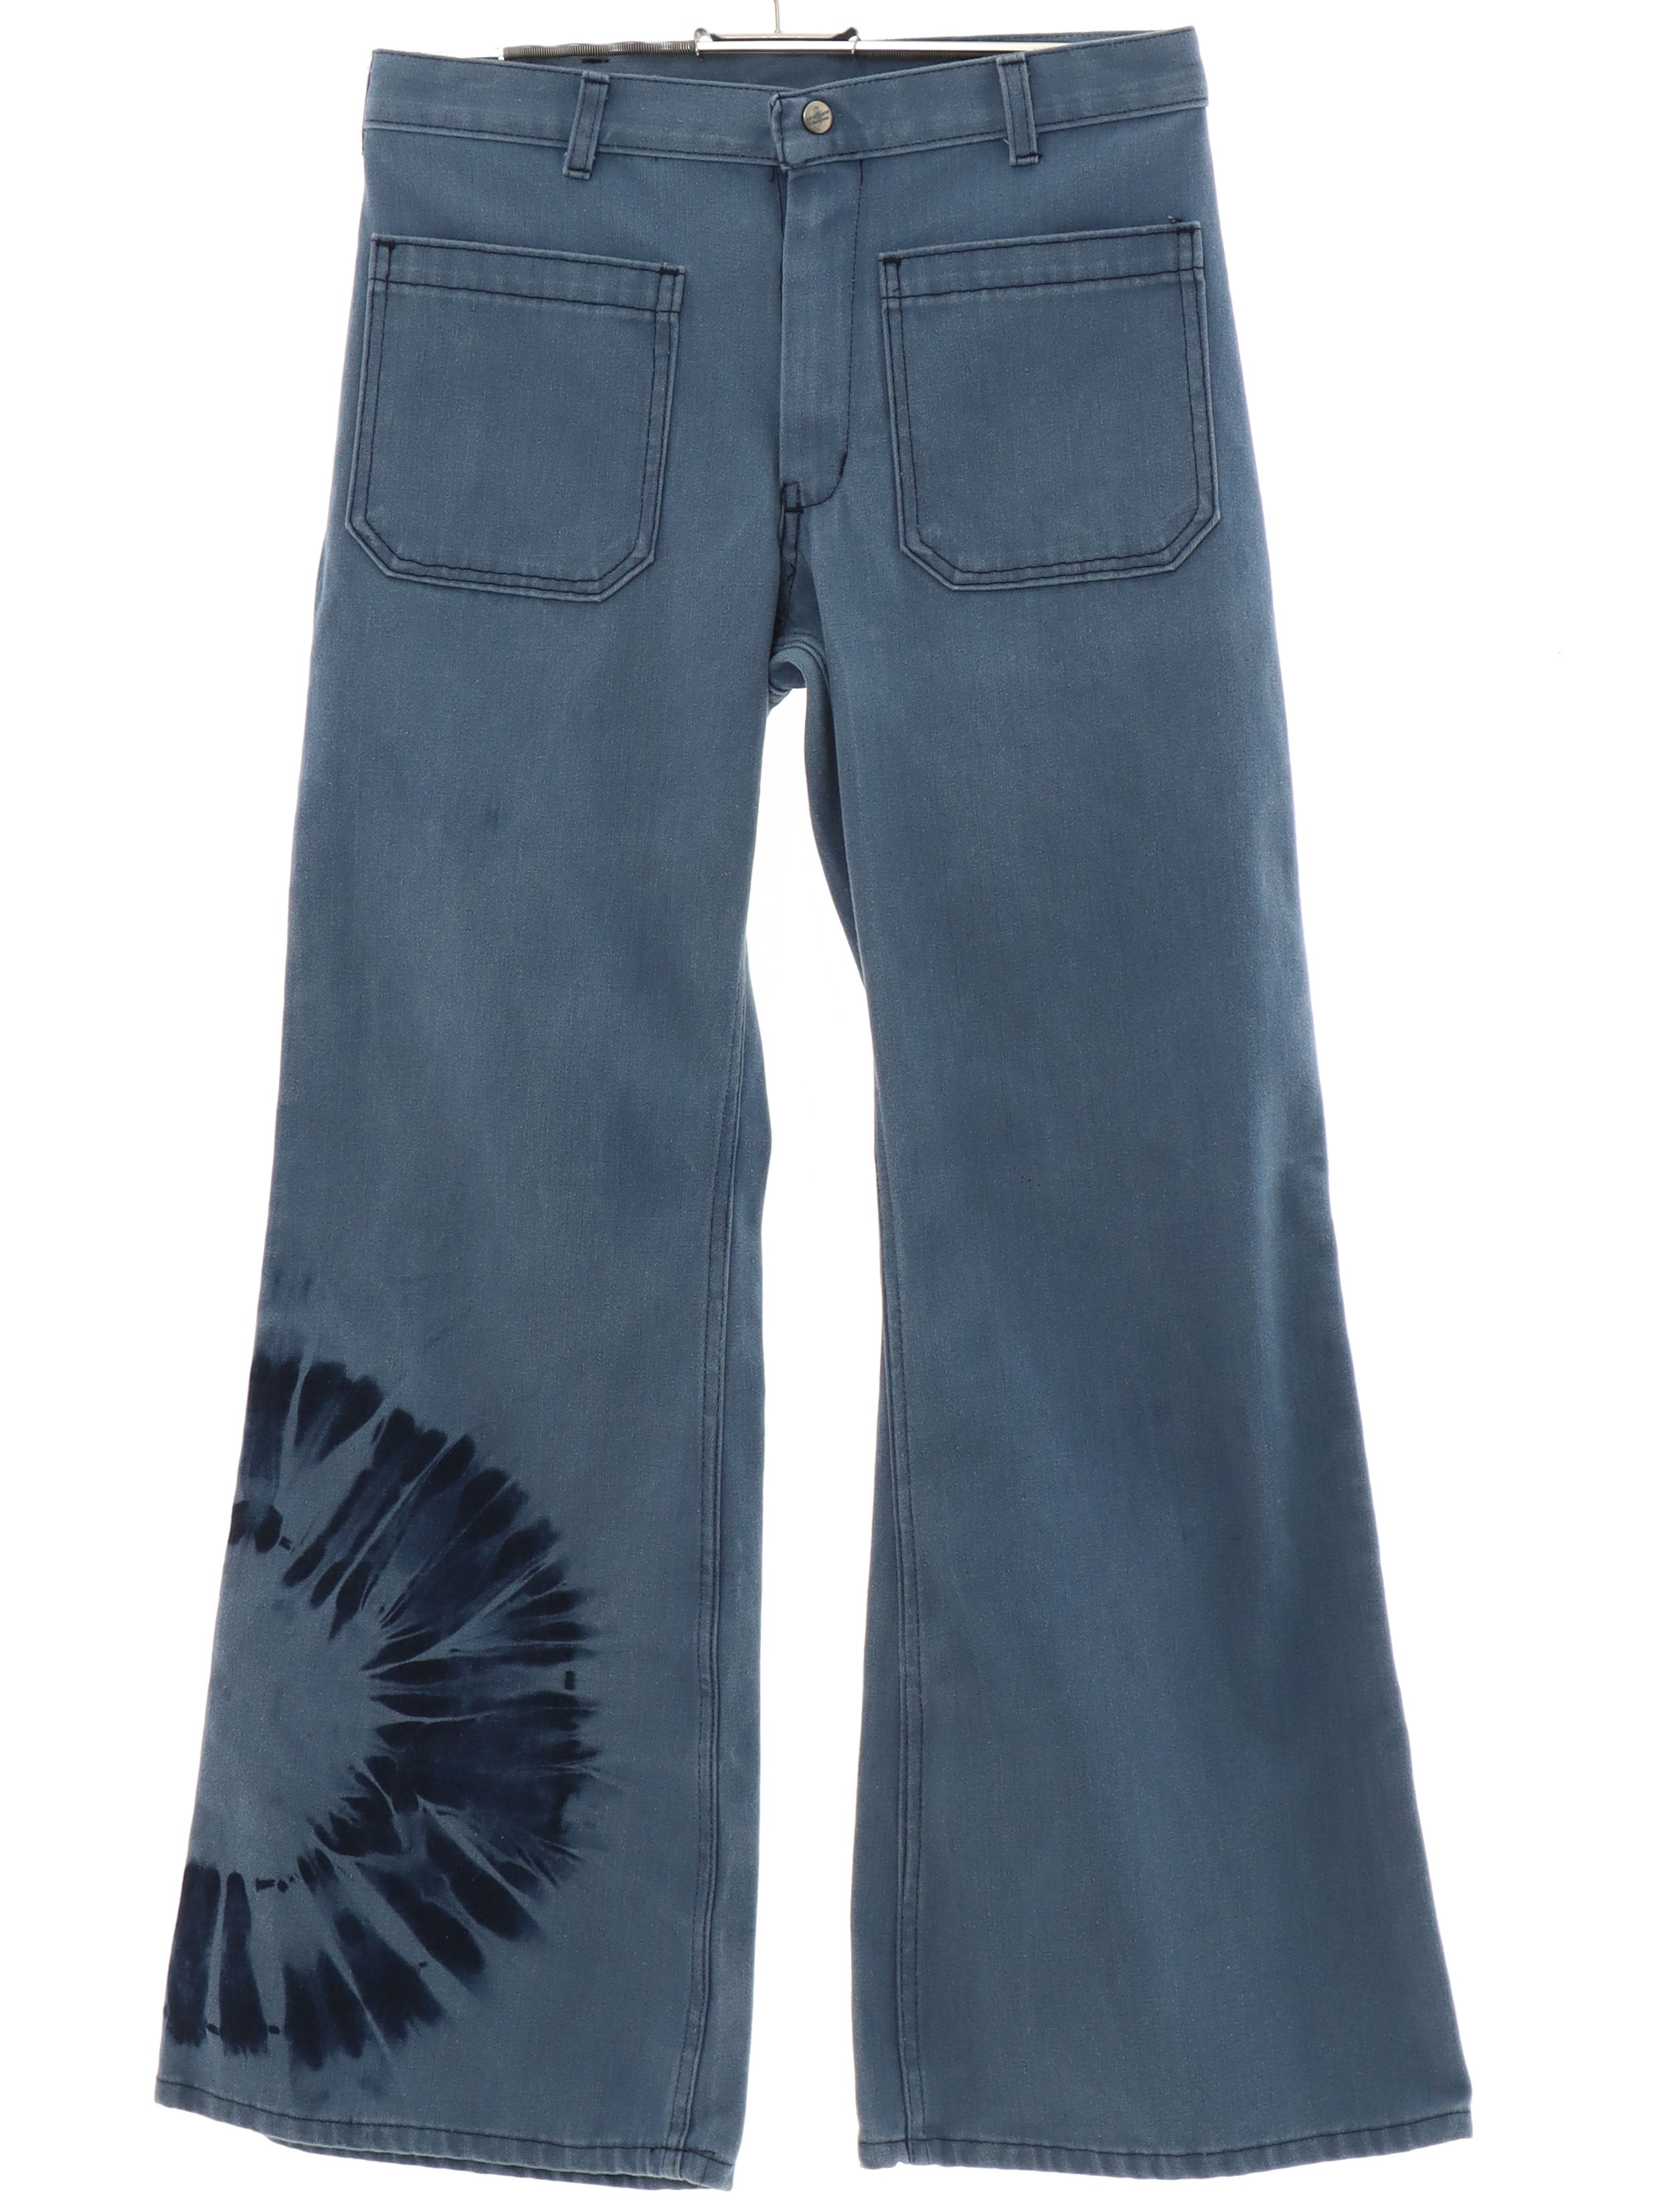 Retro 70's Bellbottom Pants: 70s style -Seafarer- Unisex dusty